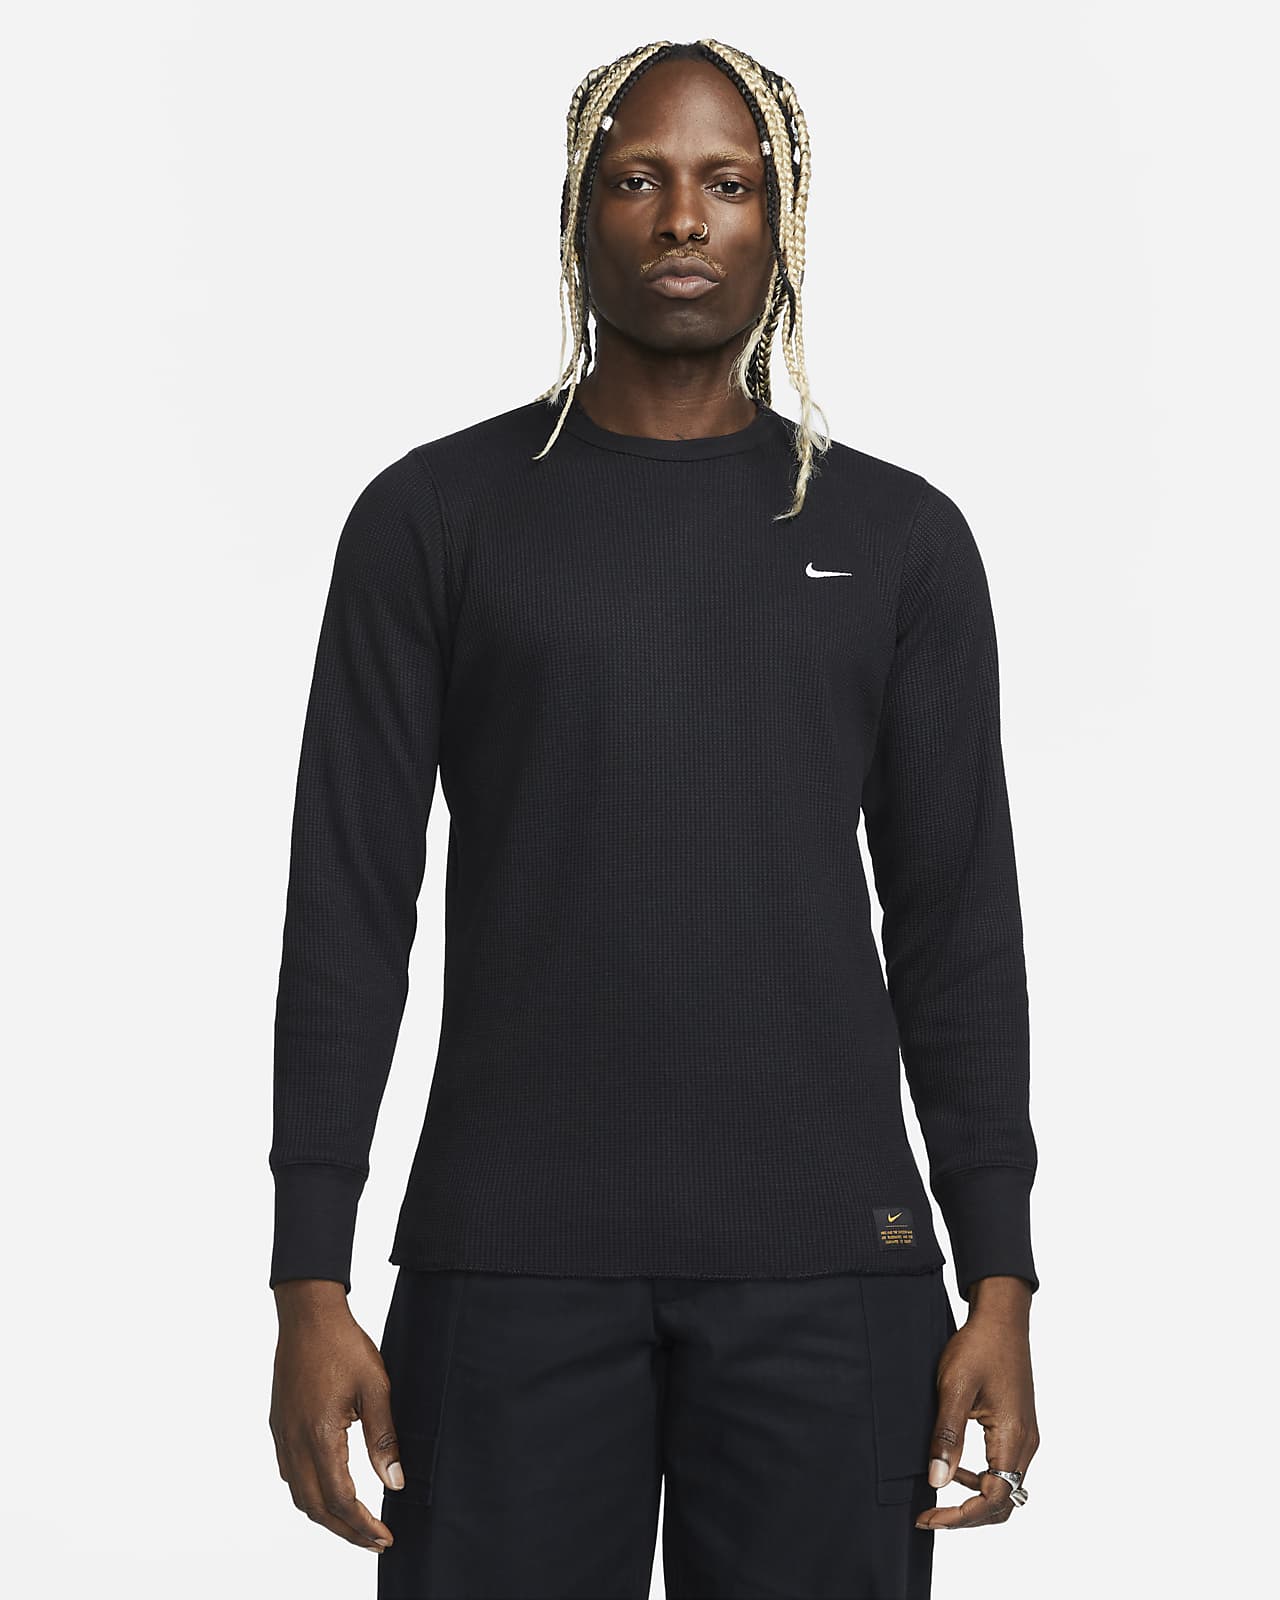 Långärmad, kraftig våfflad tröja Nike Life för män